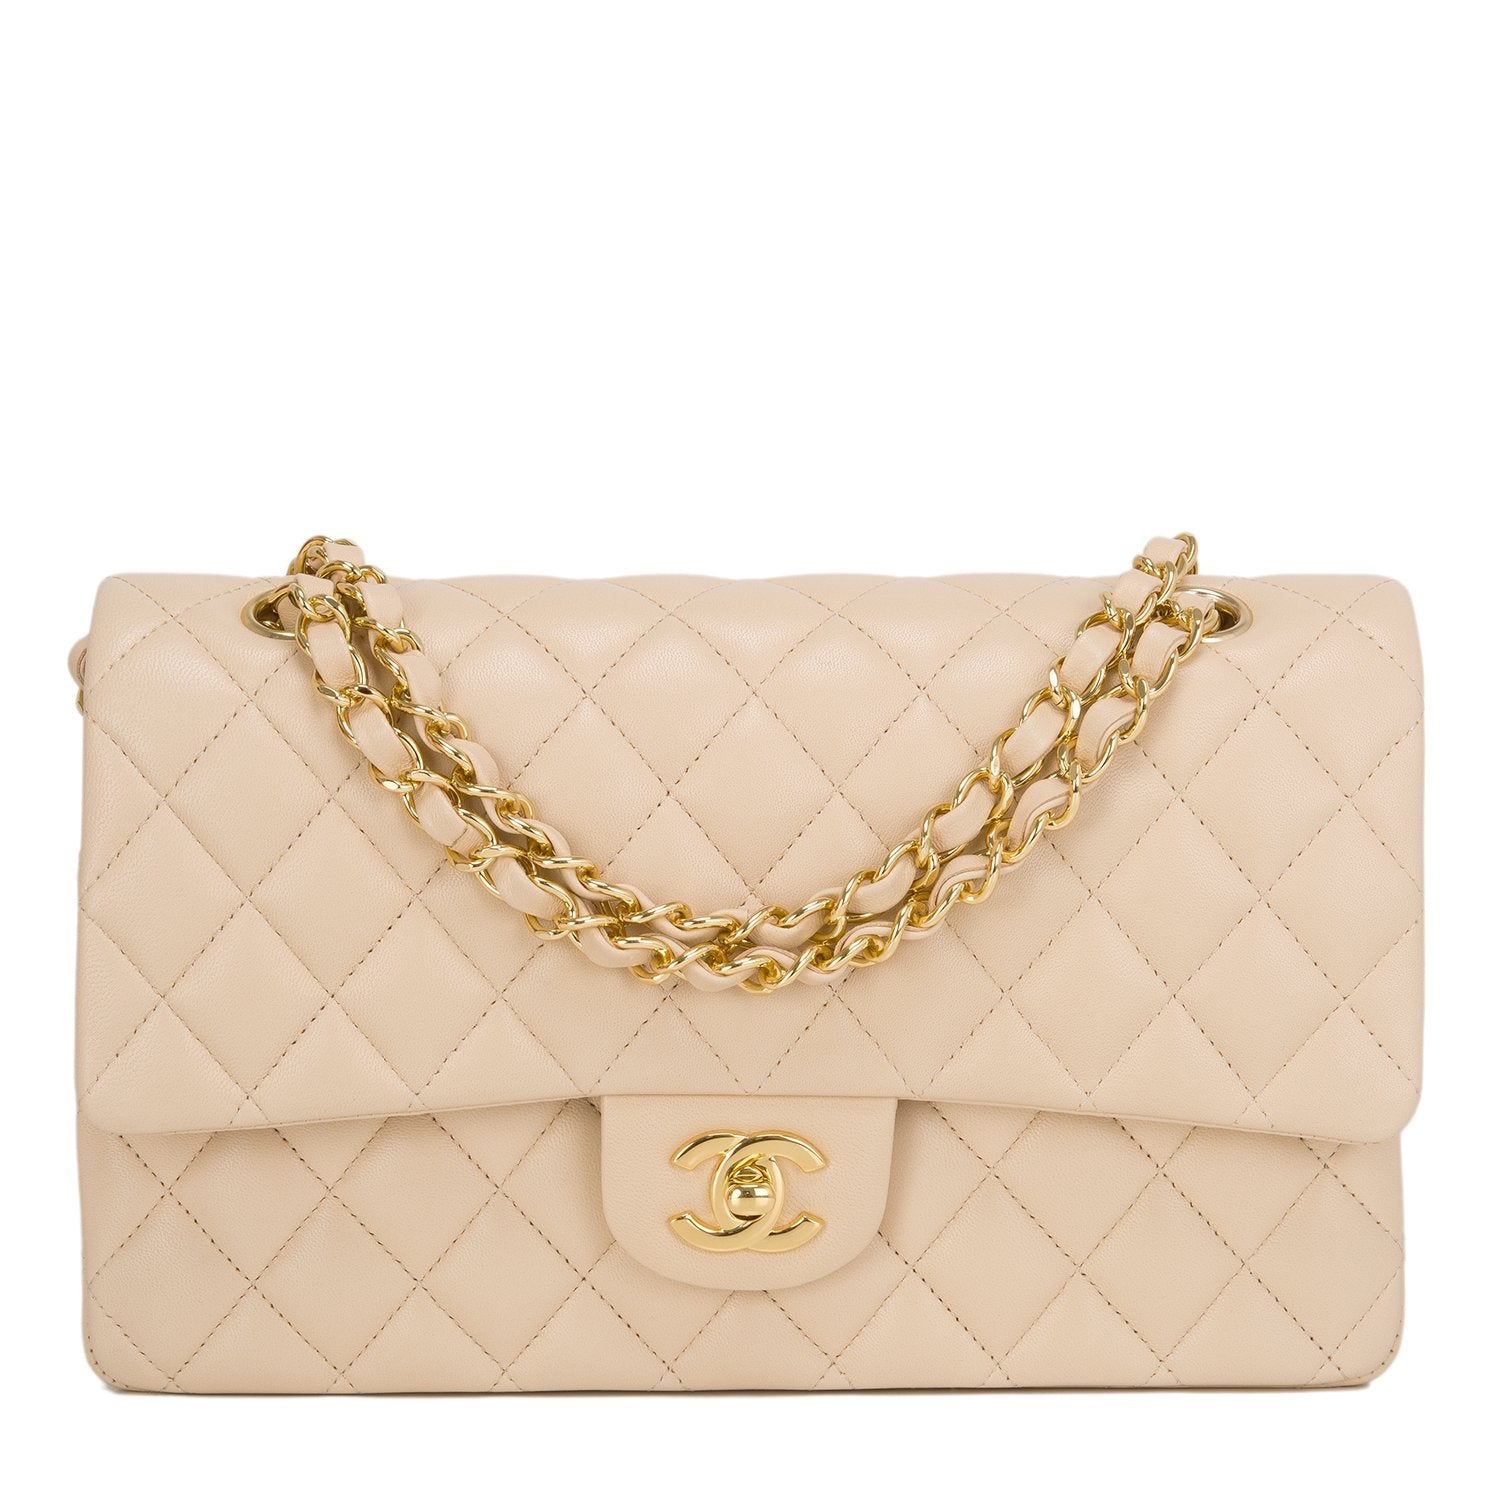 Chanel Medium Classic Handbag Beige Gold-Tone Metal